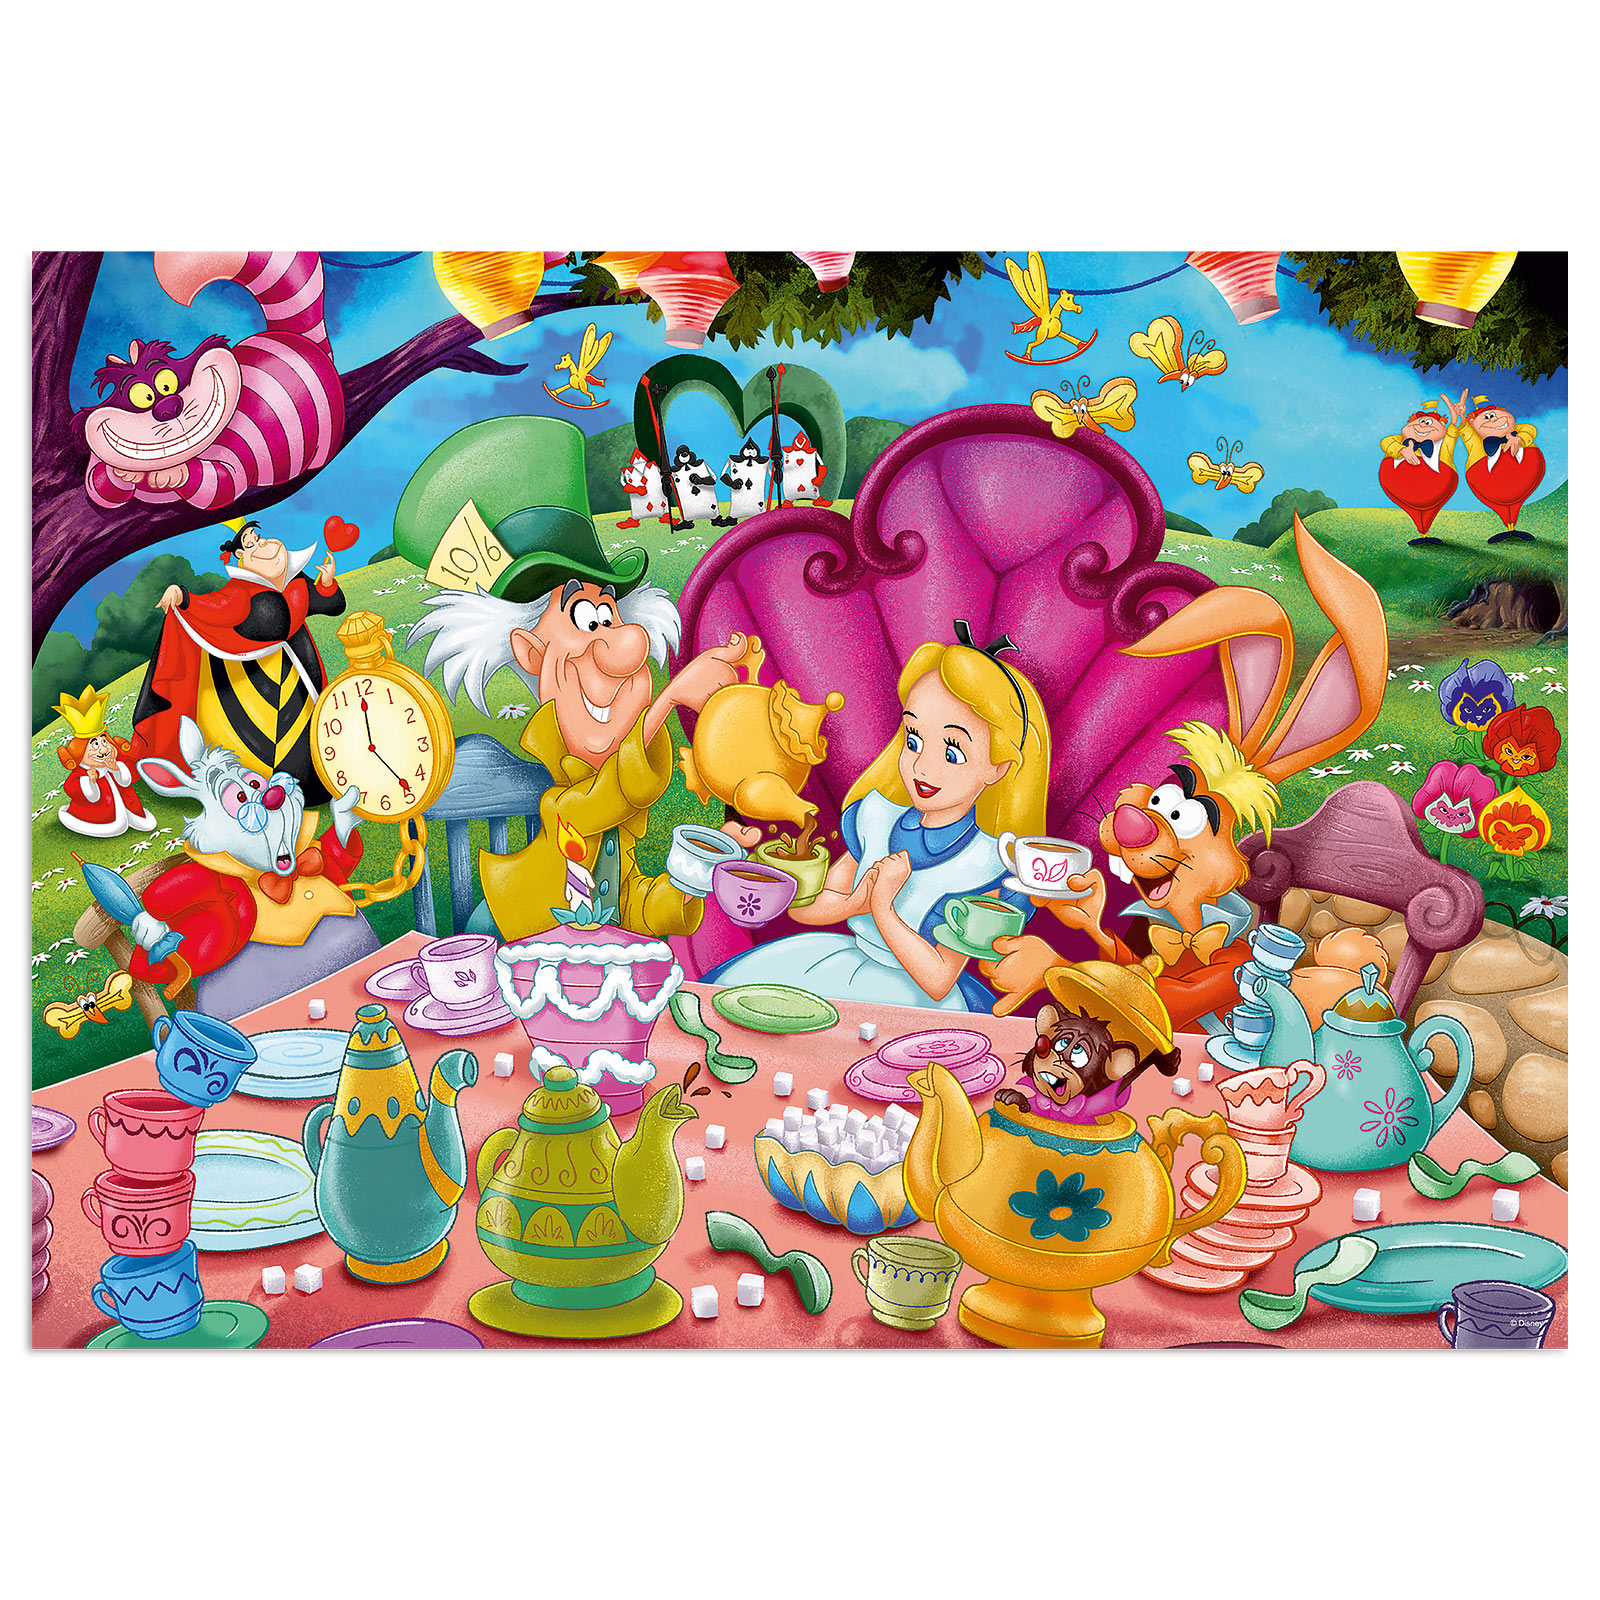 Alice in Wonderland - Tea Time Puzzle 1000 Pieces